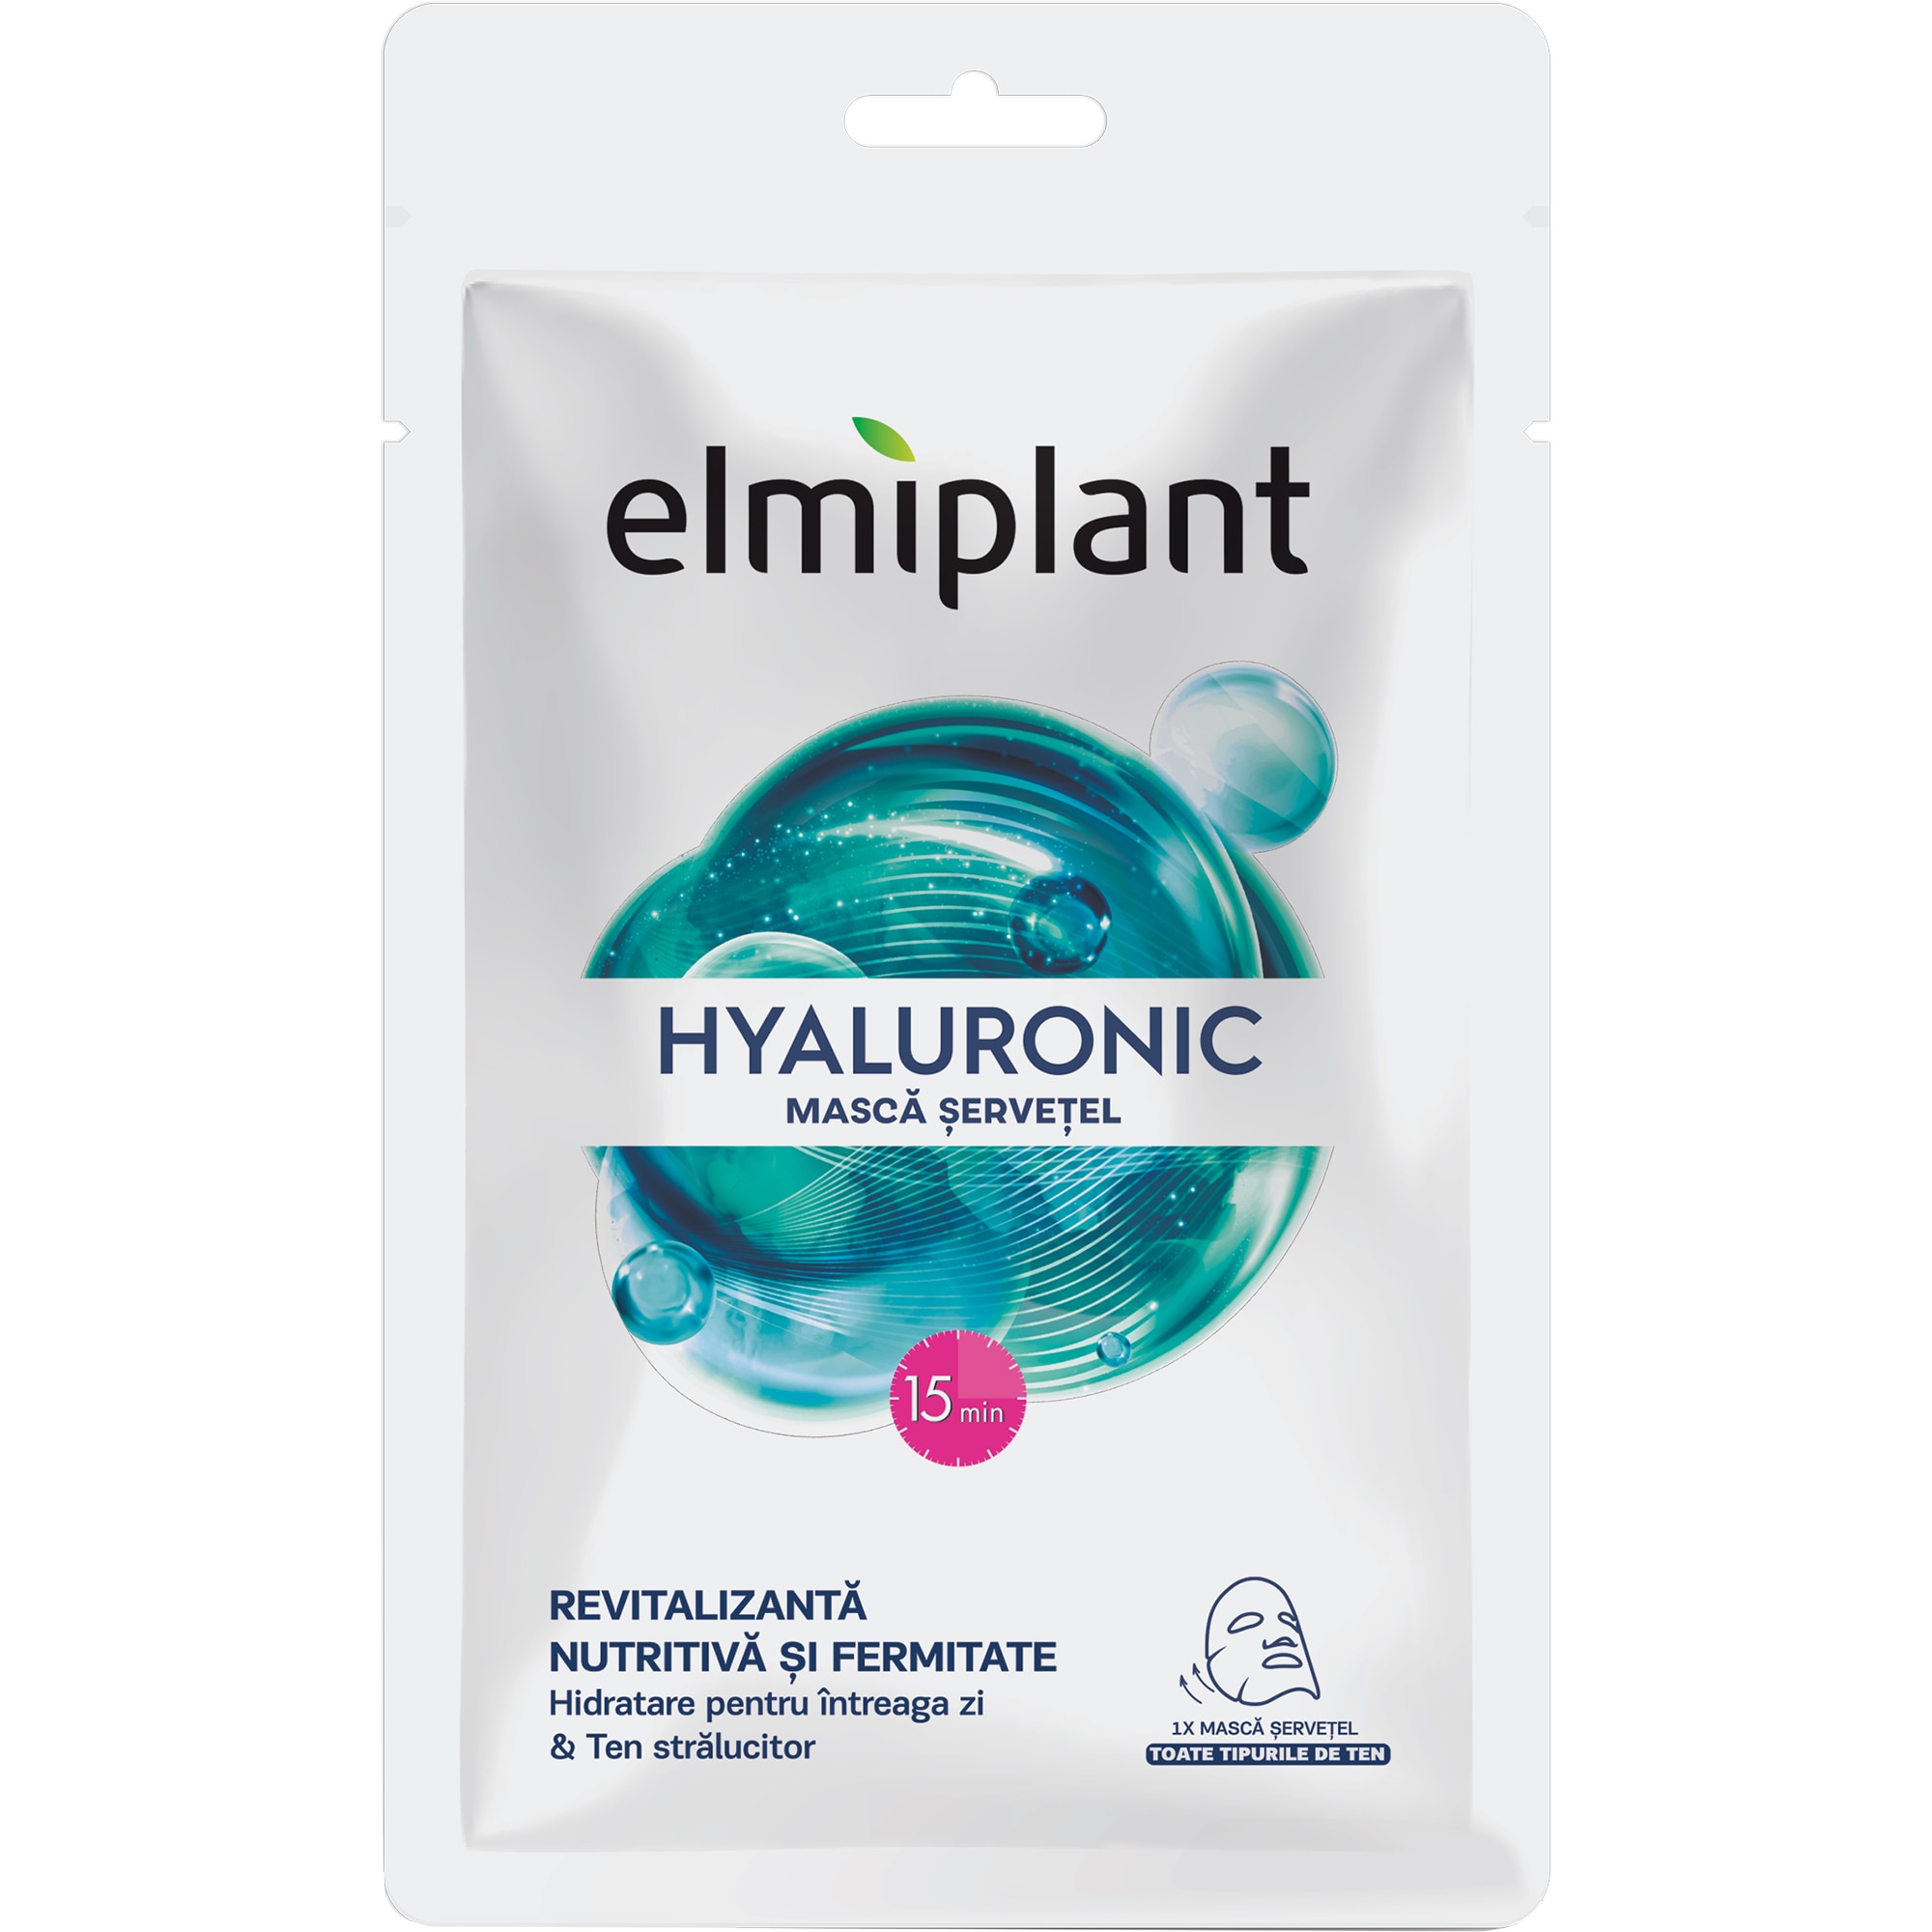 Elmiplant Hyaluronic Masca servetel 25 ml | Lei/buc | qconf.ro